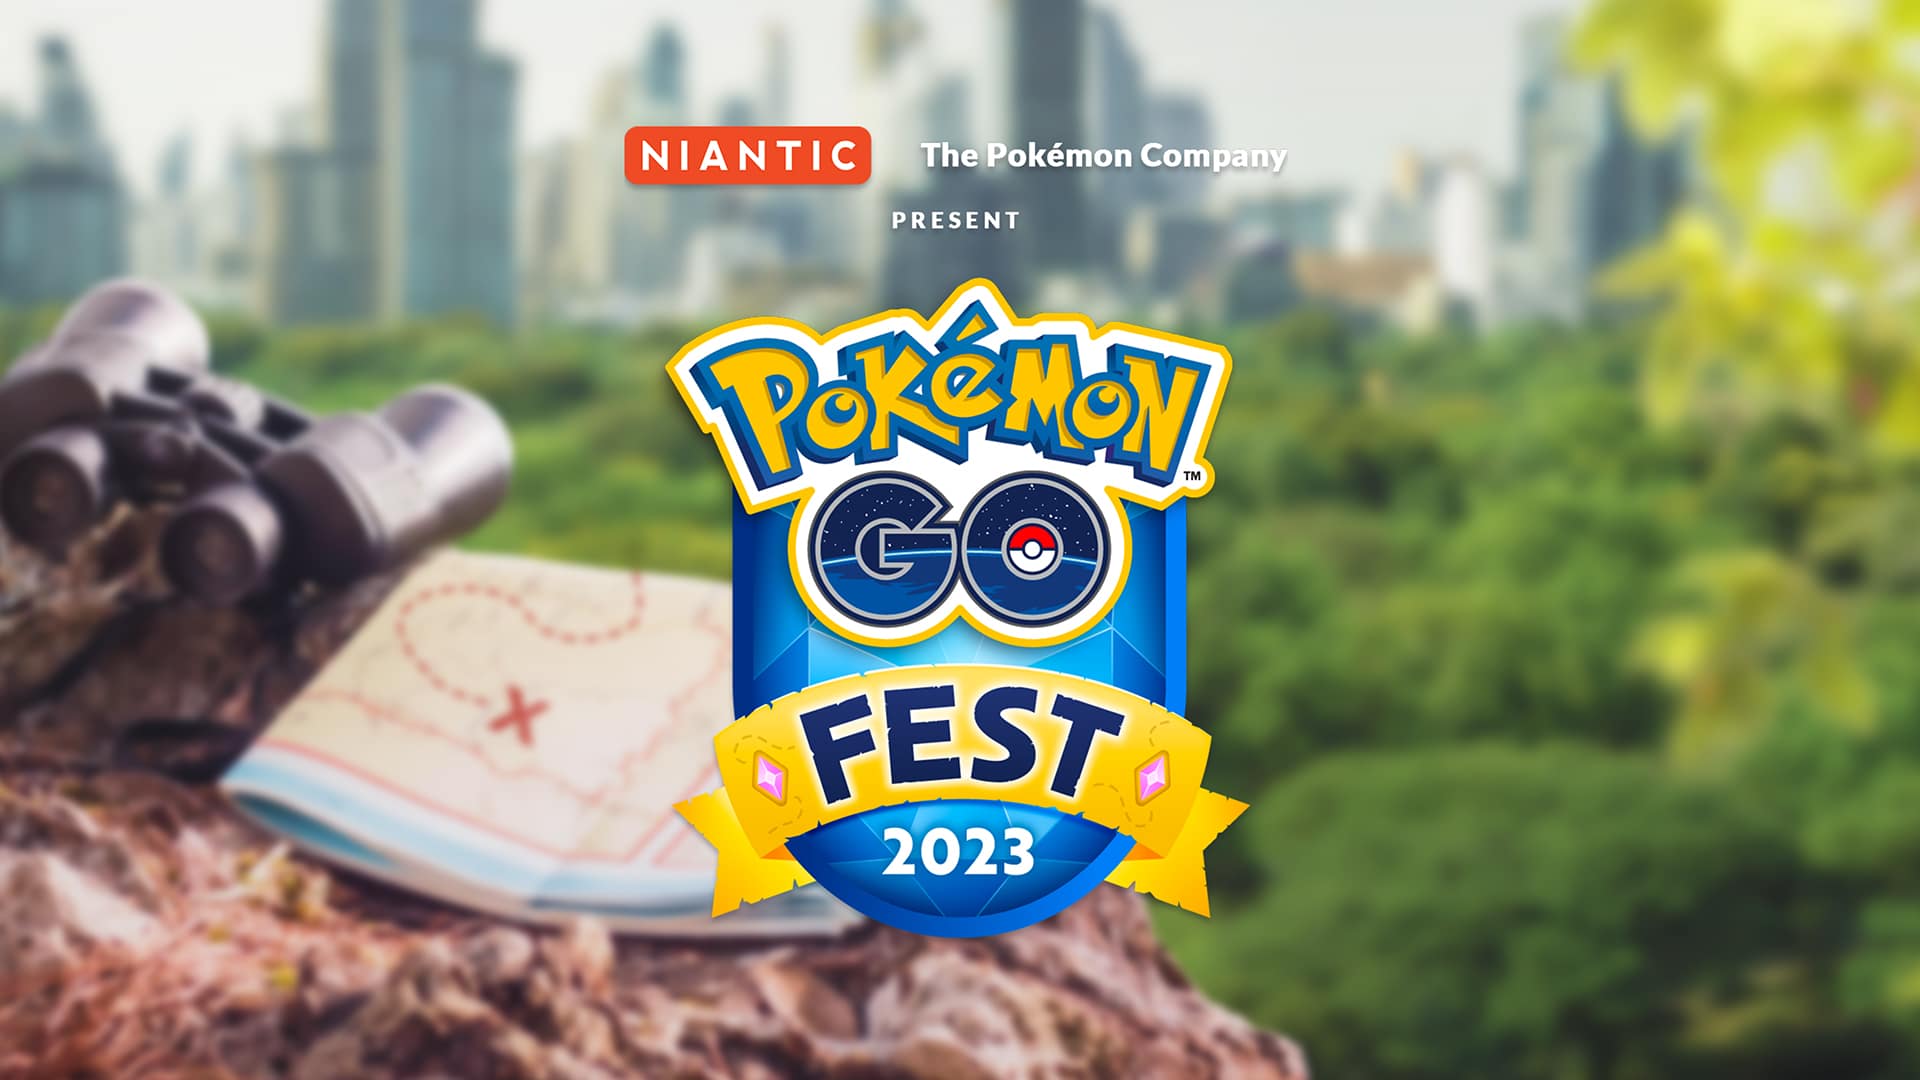 Pokémon Go fest 2023